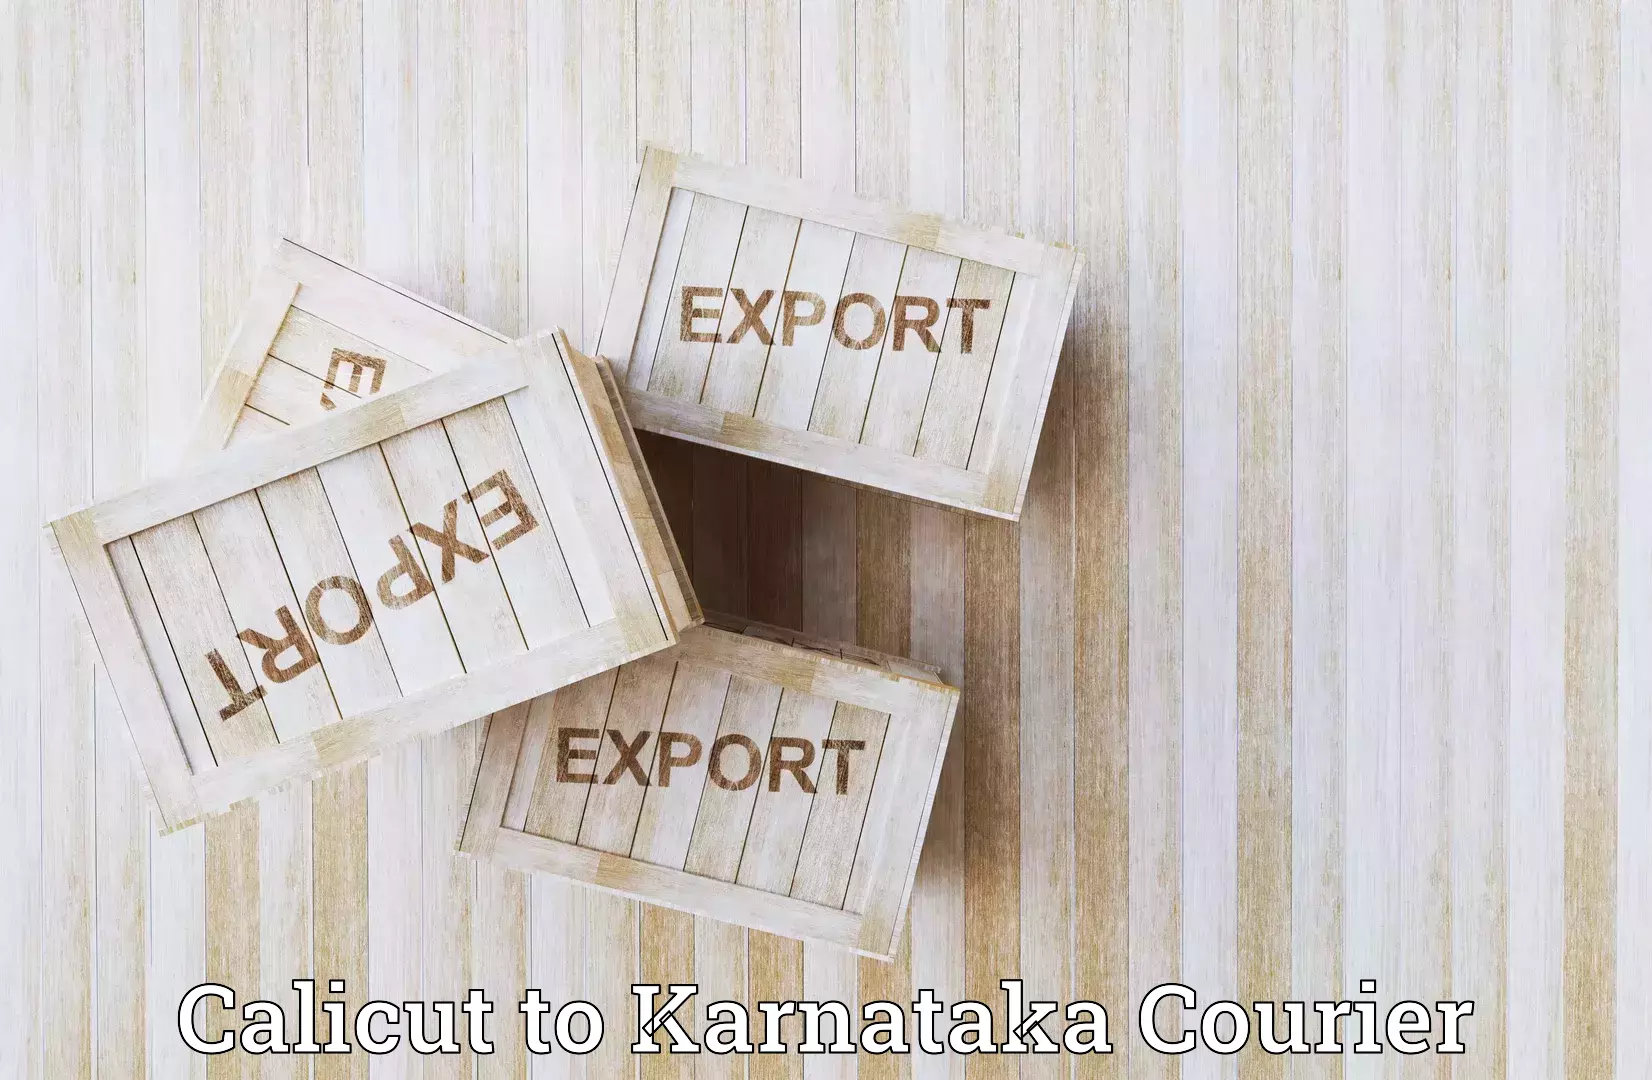 Shipping and handling Calicut to Karnataka